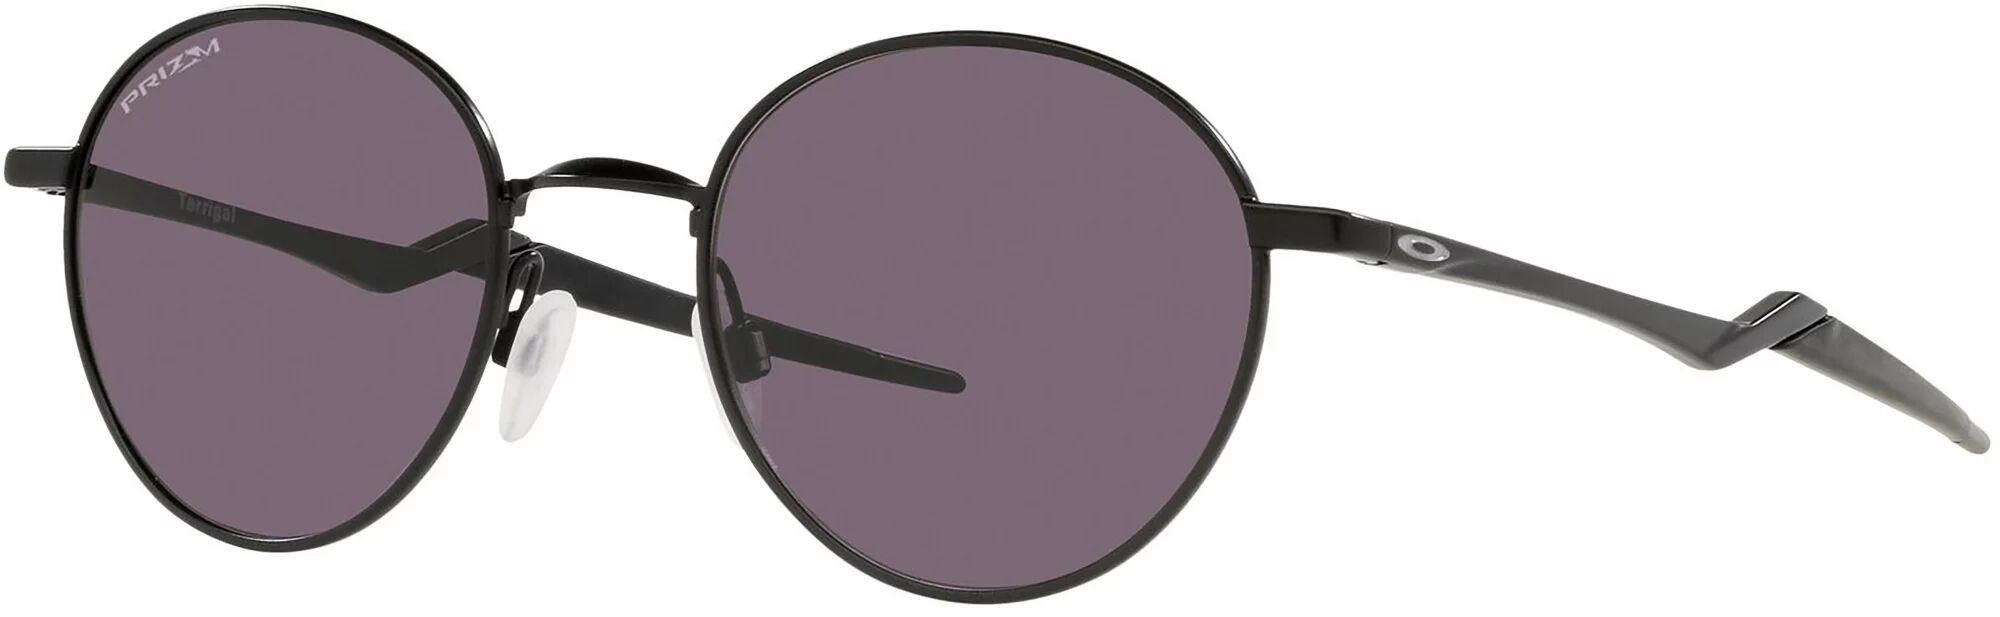 Oakley Terrigal Sunglasses, Men's, Satin Black/Prizm Grey   Father's Day Gift Idea